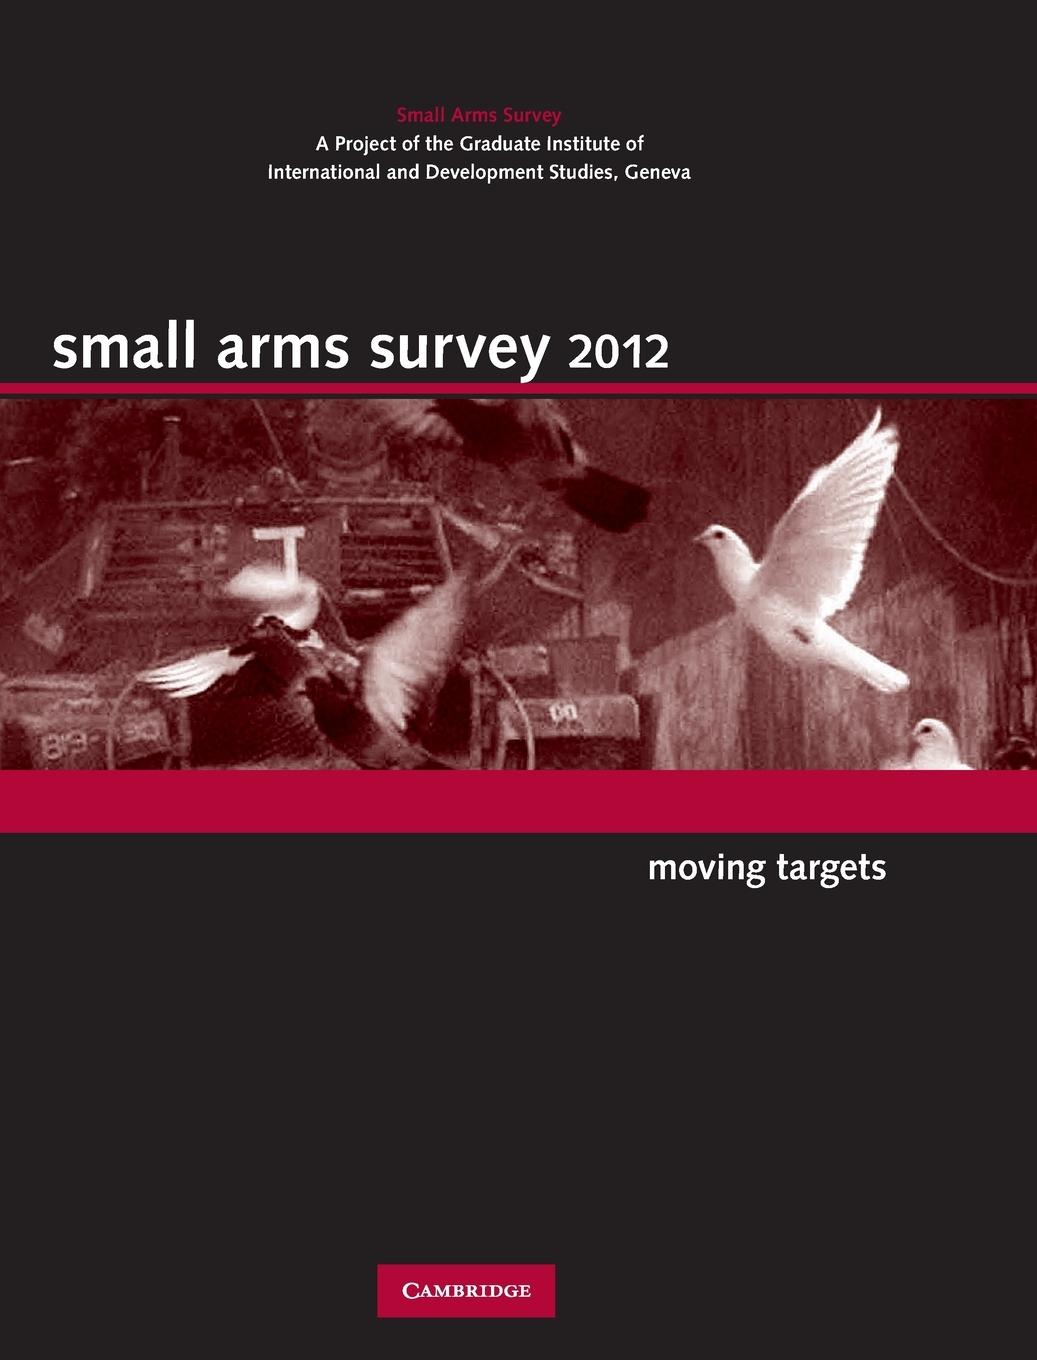 Small Arms Survey 2012: Moving Targets - Small Arms Survey Geneva